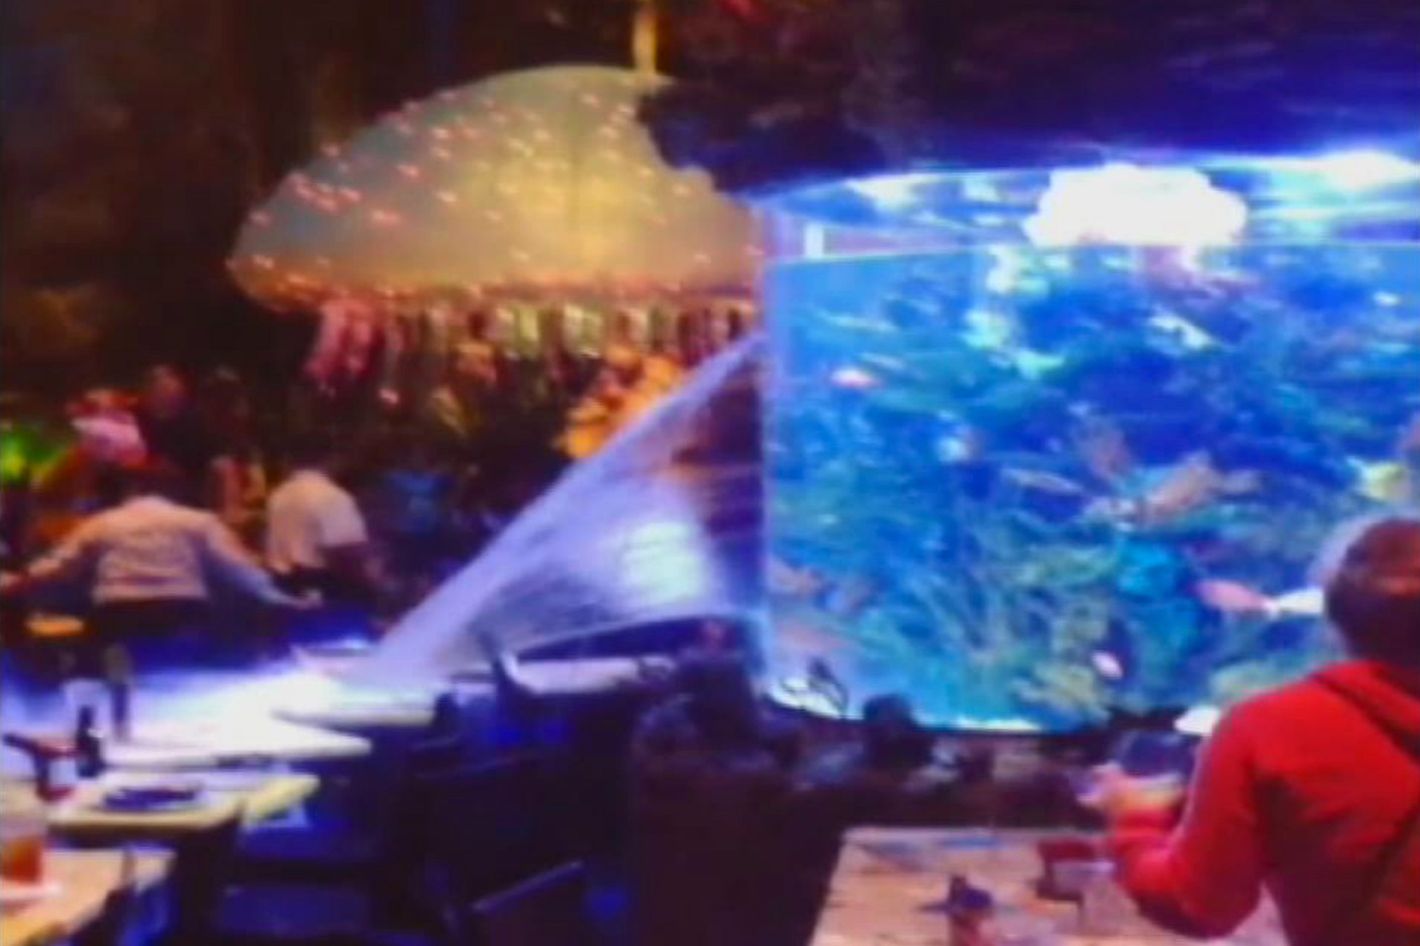 Watch a Big Fish Tank at a Disney Restaurant Burst at the Seam